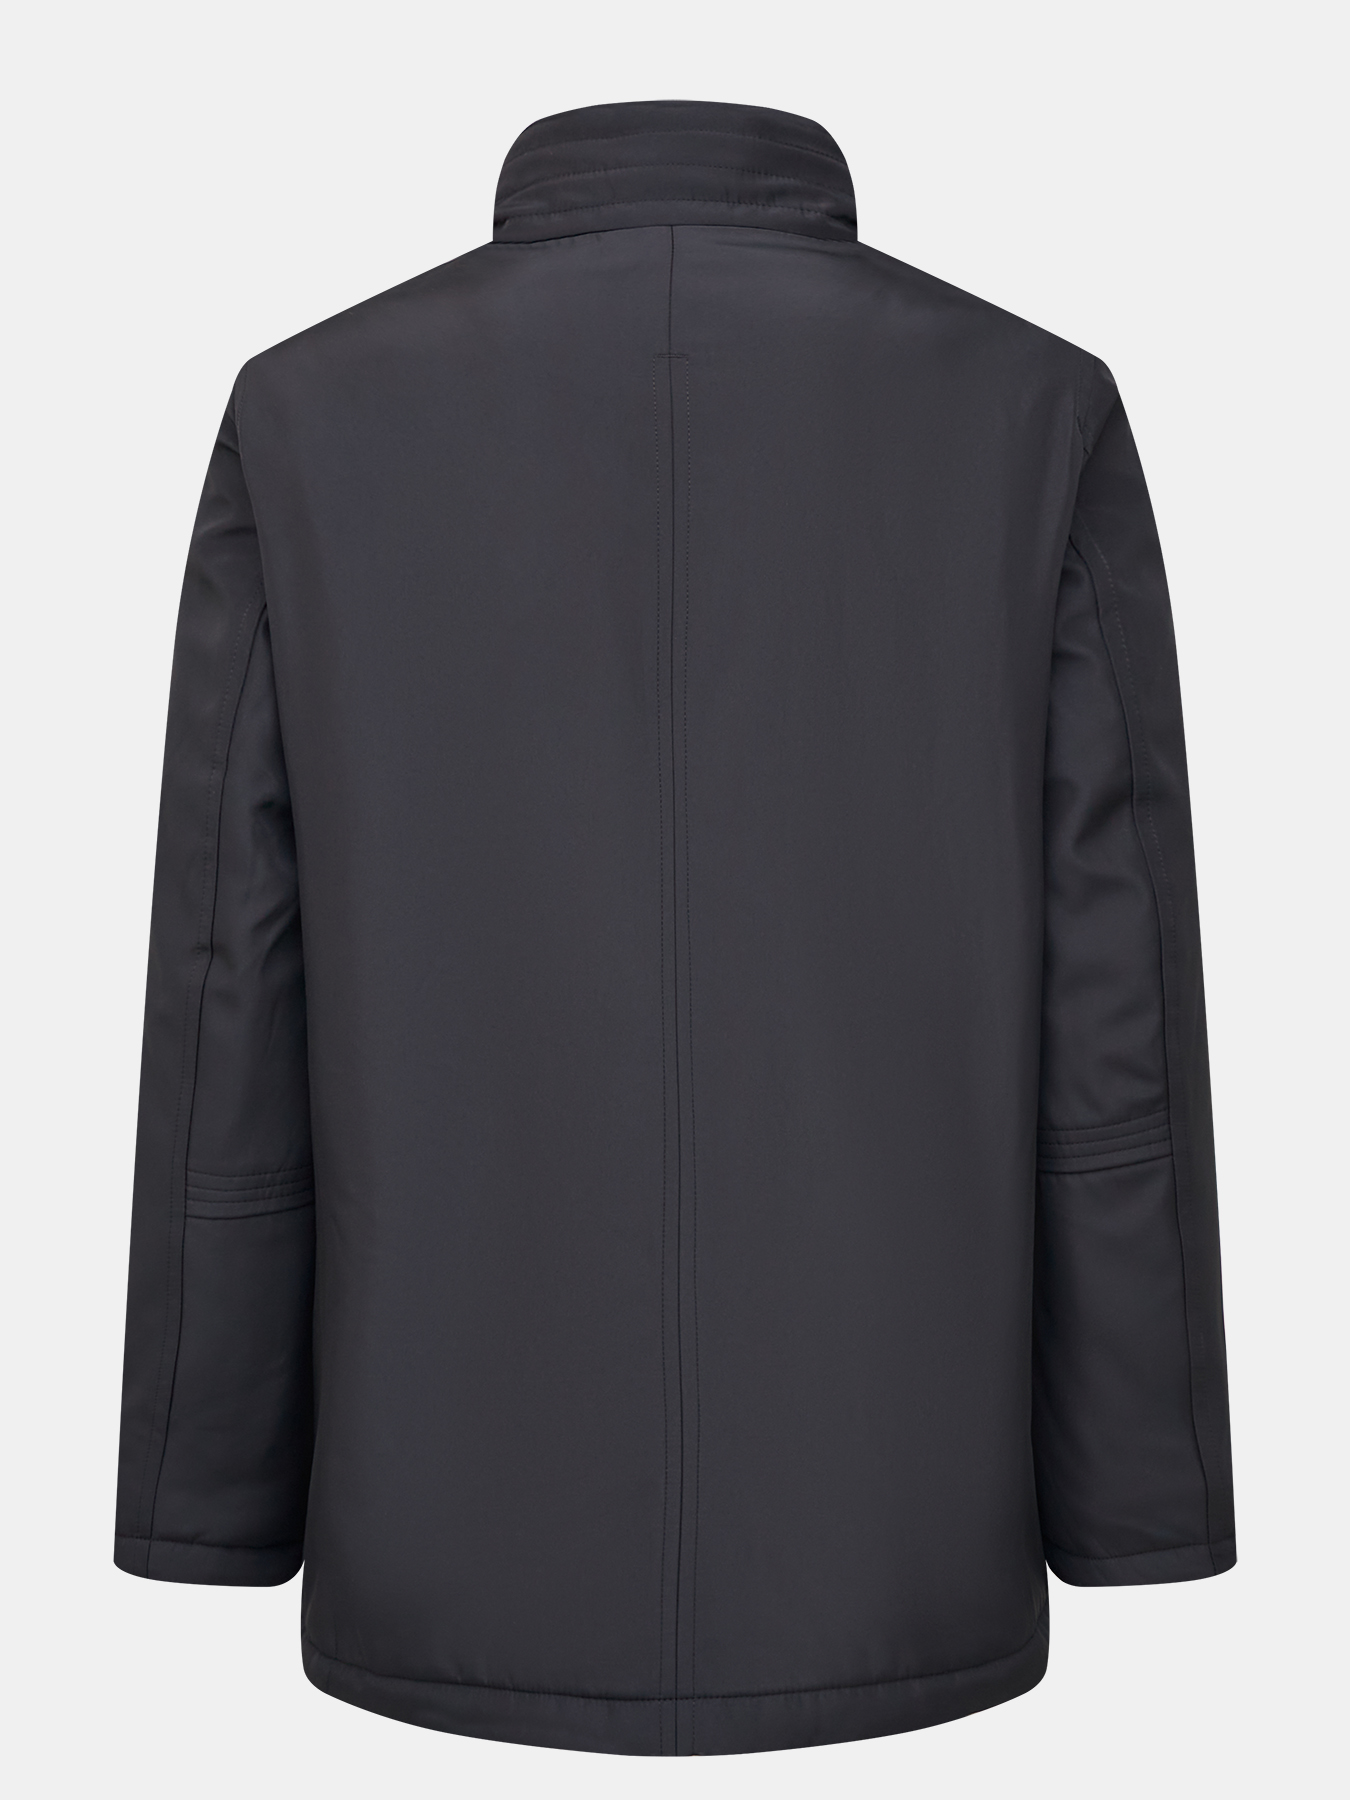 Куртка Ritter 367556-030, цвет черный, размер 58 - фото 3